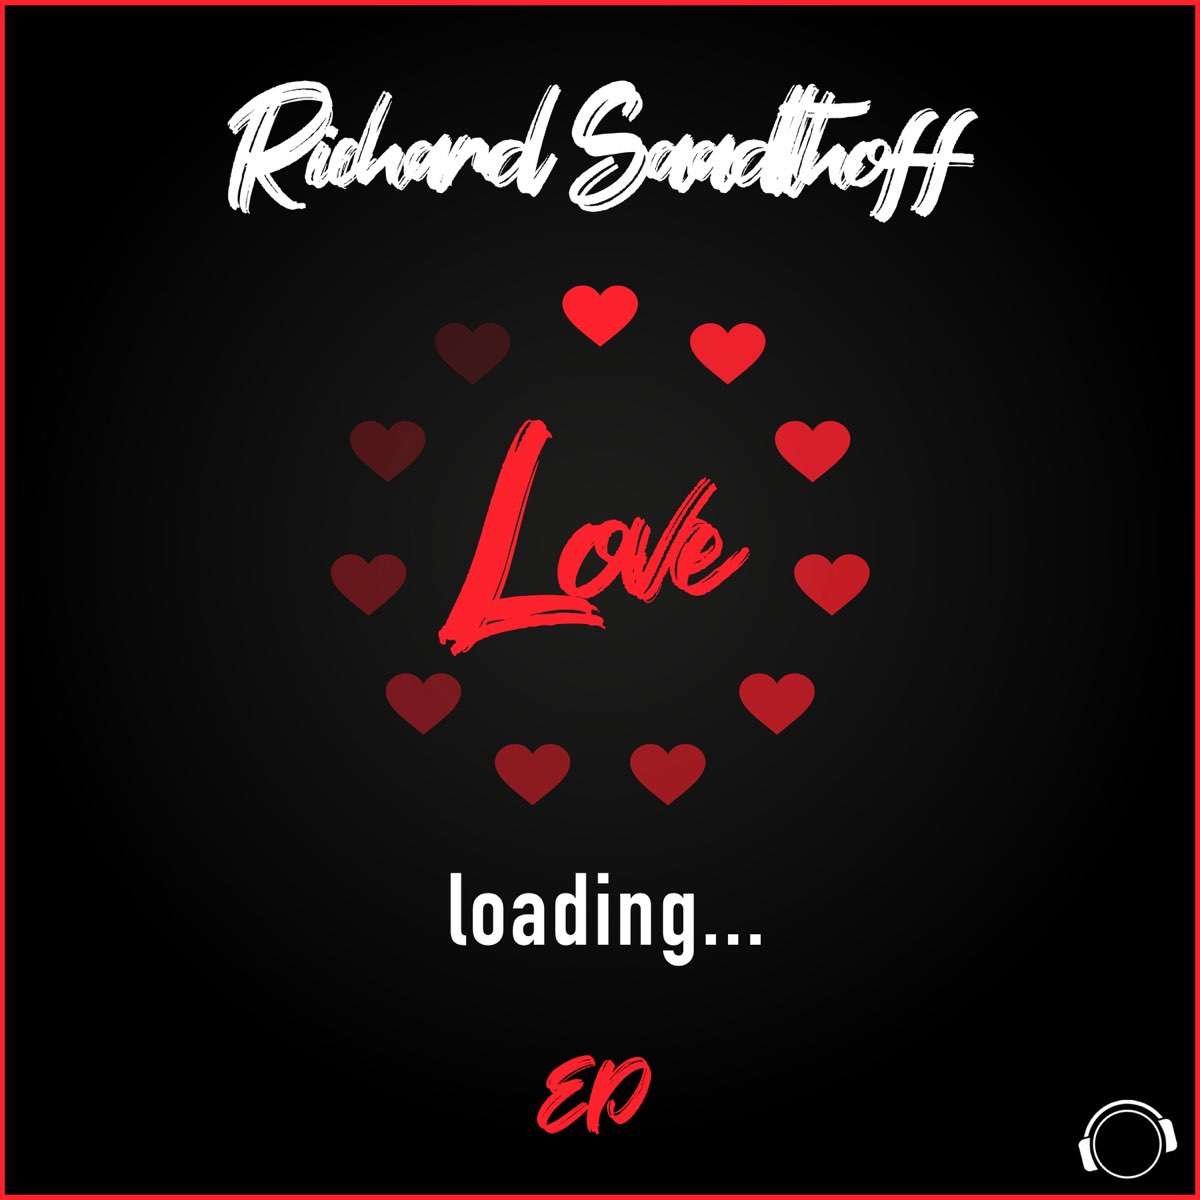 Love loading. Loading любовь. All about Love.